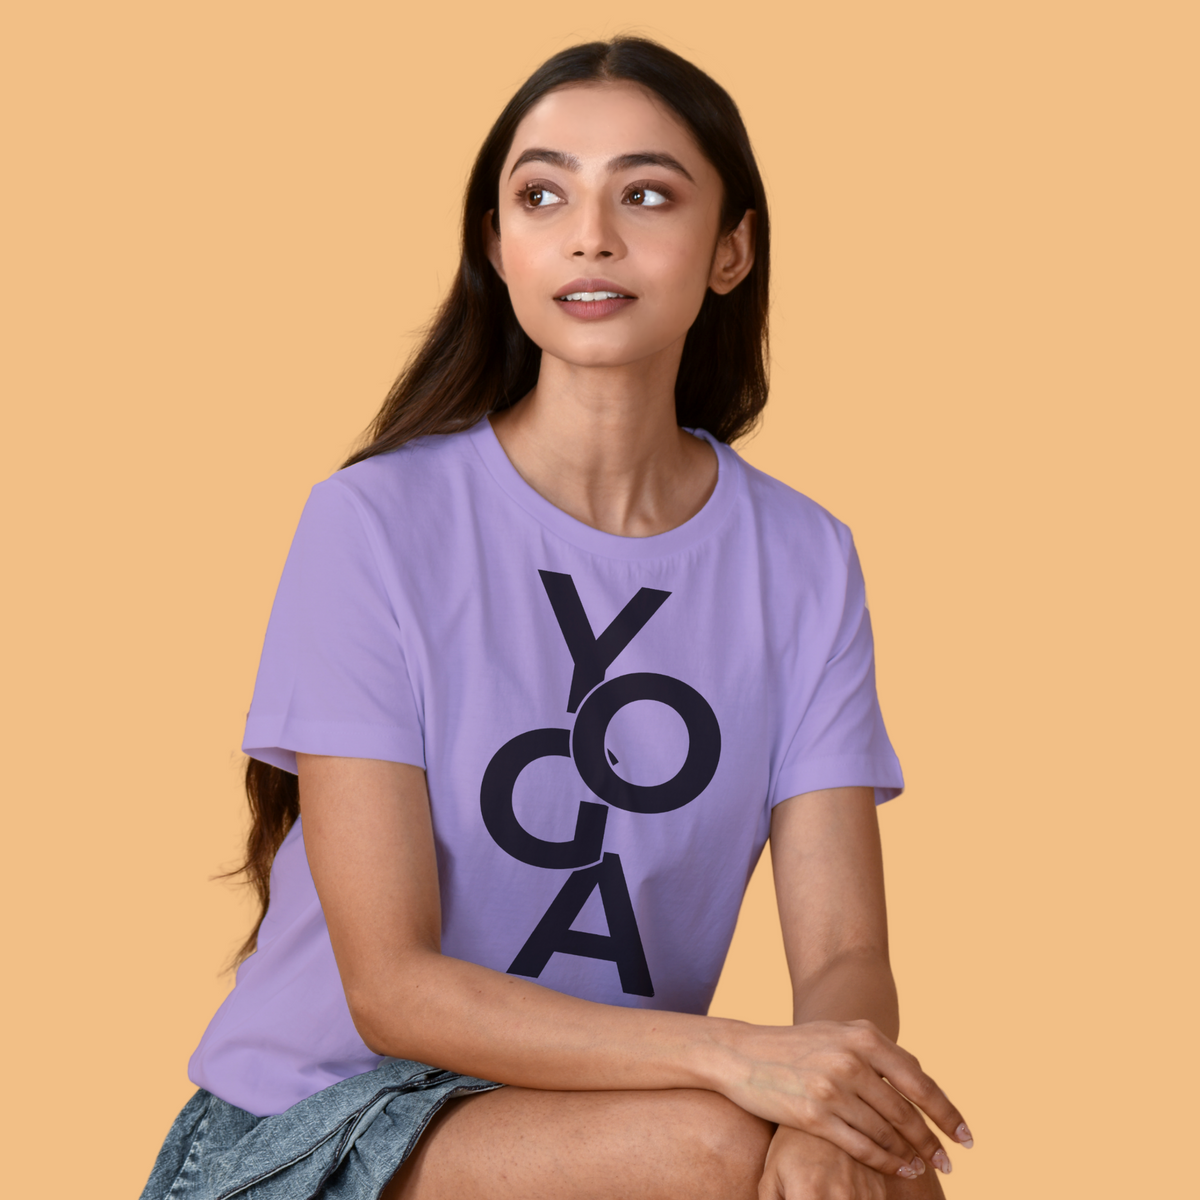 I Love Yoga Kids Cotton Printed T-shirt For Girls from Gorgit